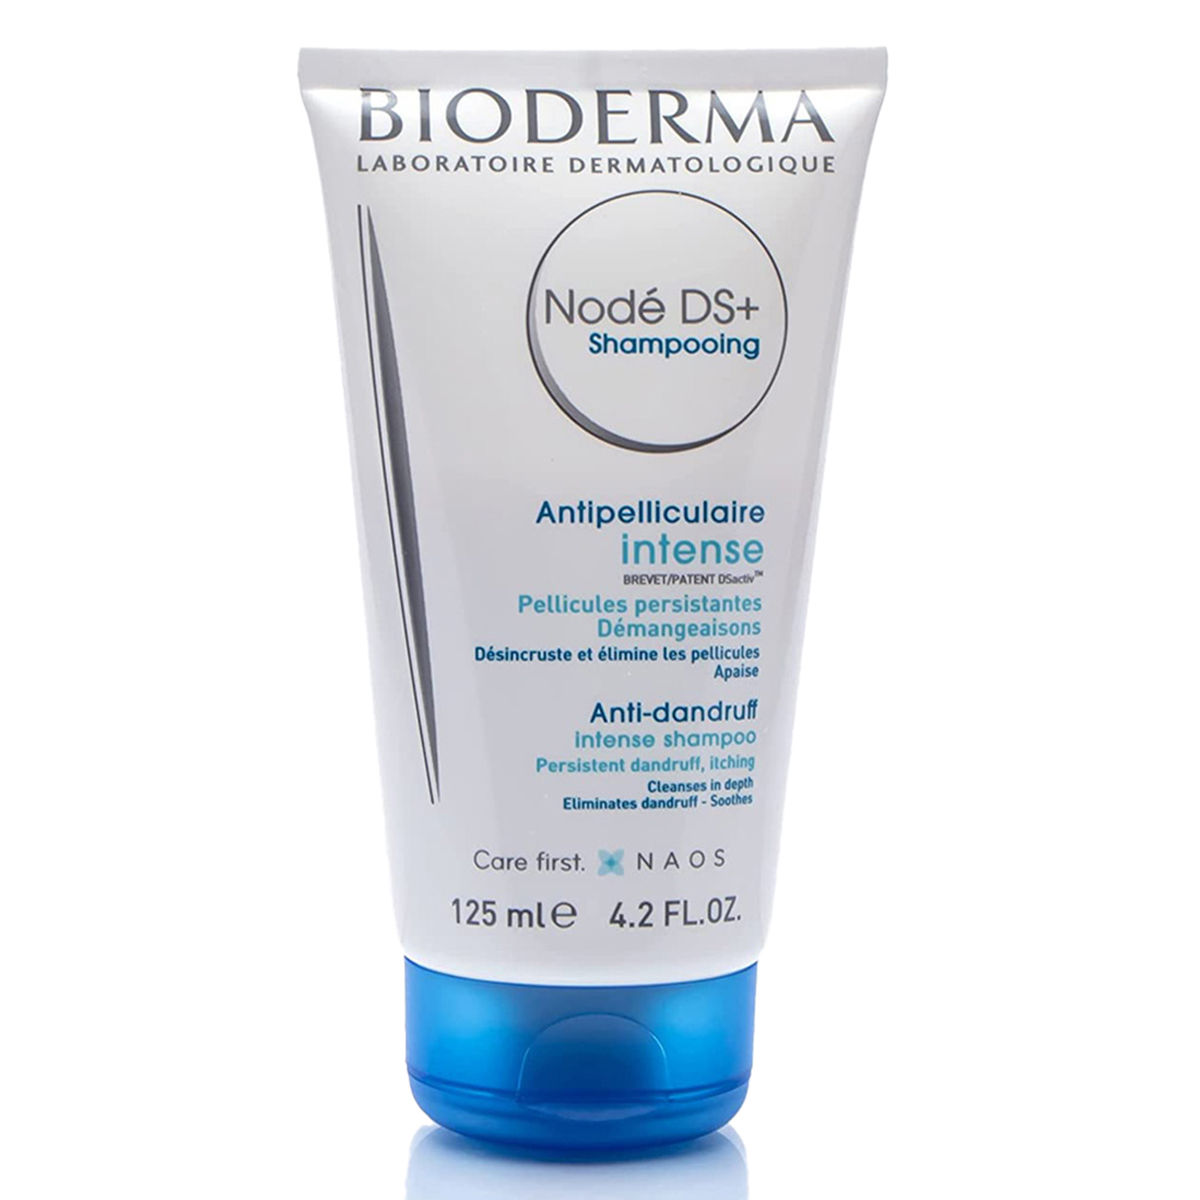 Bioderma Pigmentbio Sensitive Areas Cream 75 ml Price, Uses, Side Effects,  Composition - Apollo Pharmacy